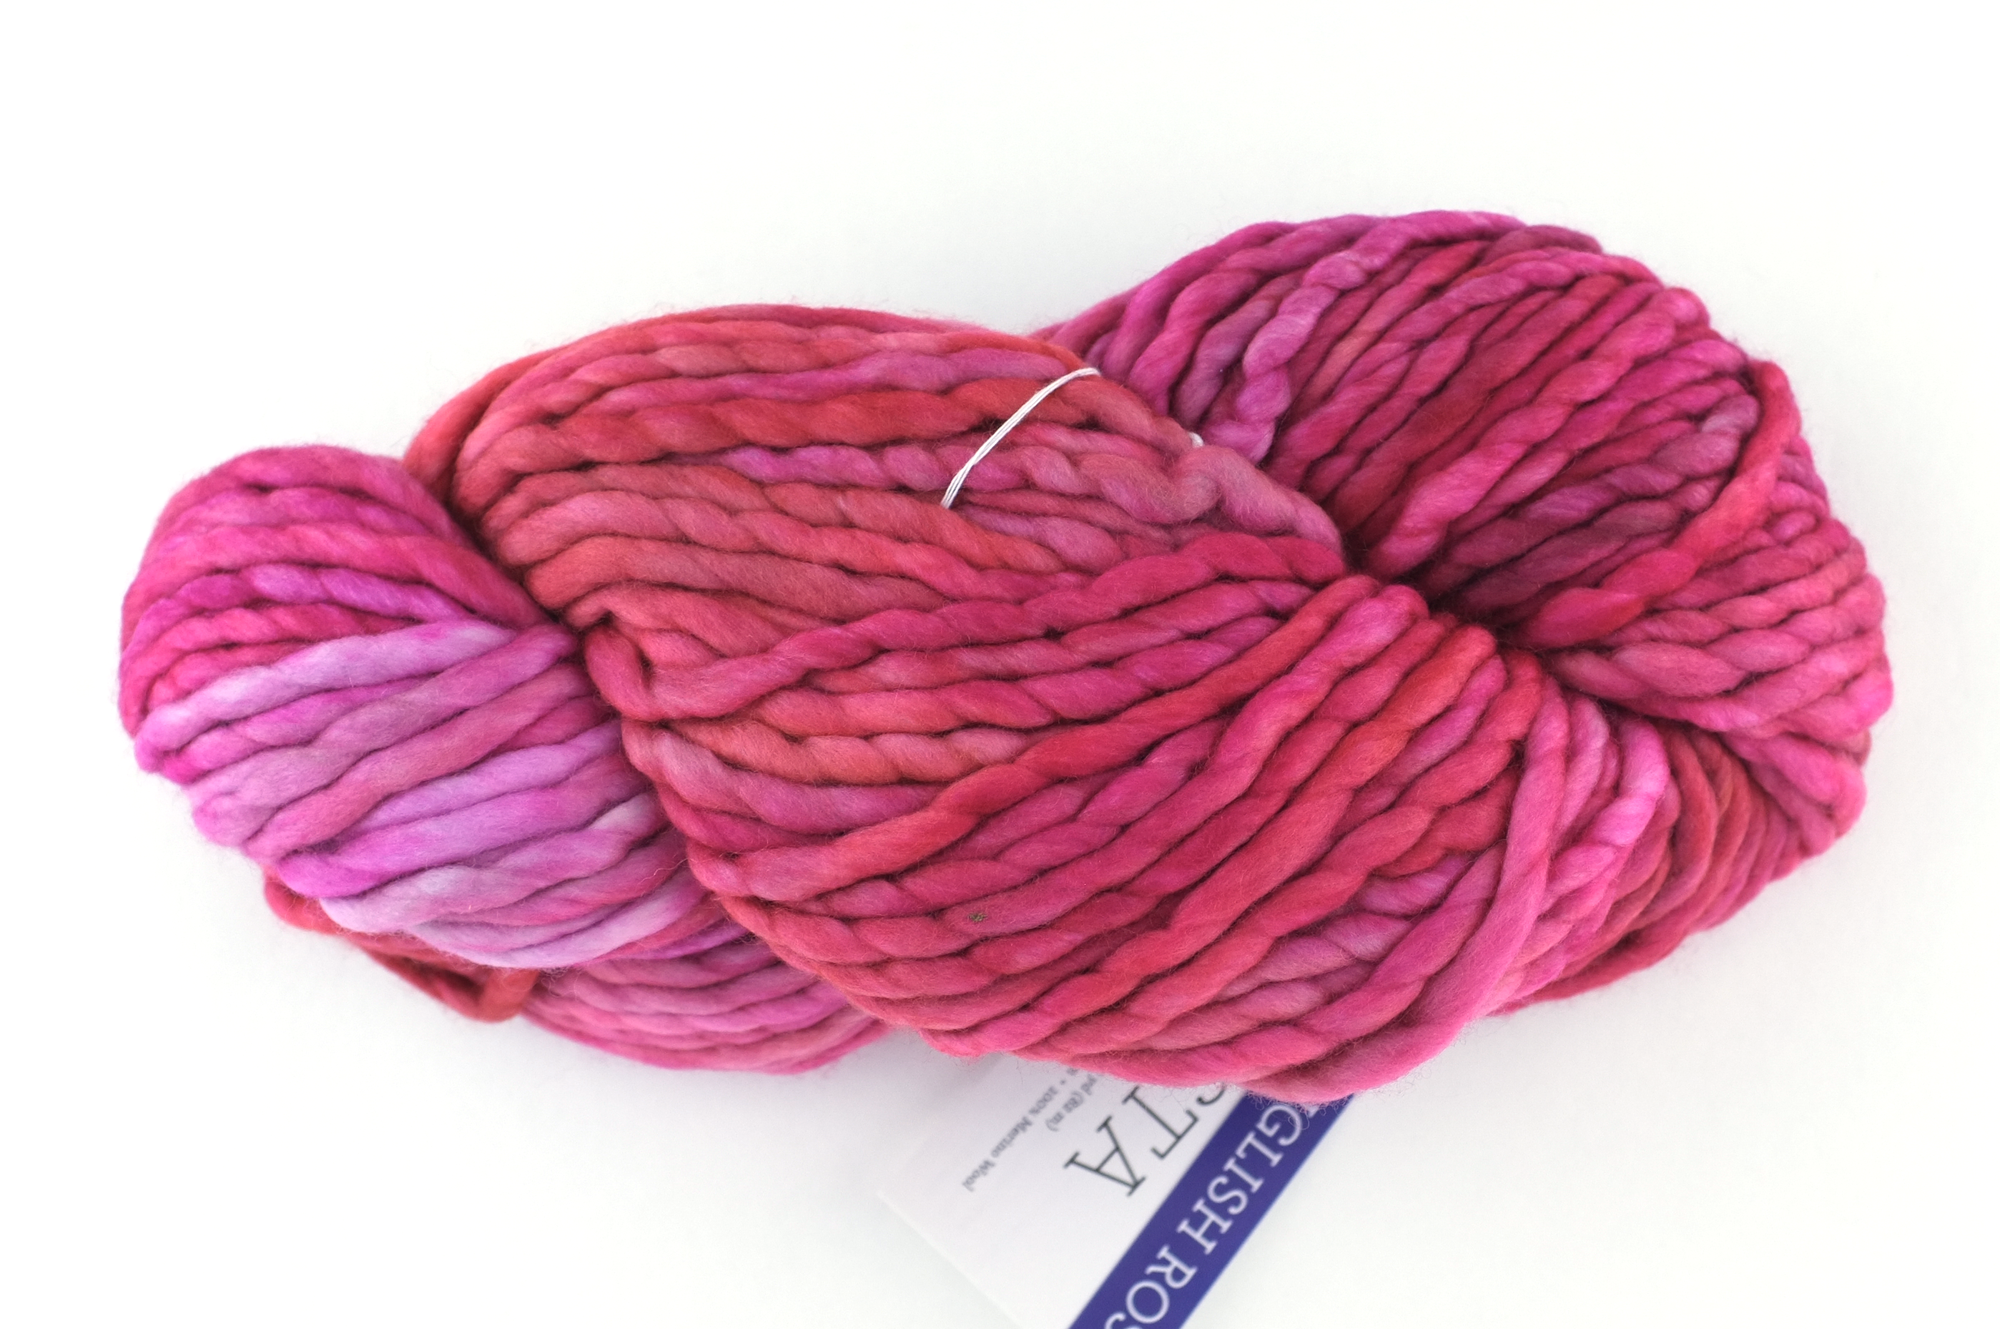 Malabrigo Rasta in color English Rose, Merino Wool Super Bulky